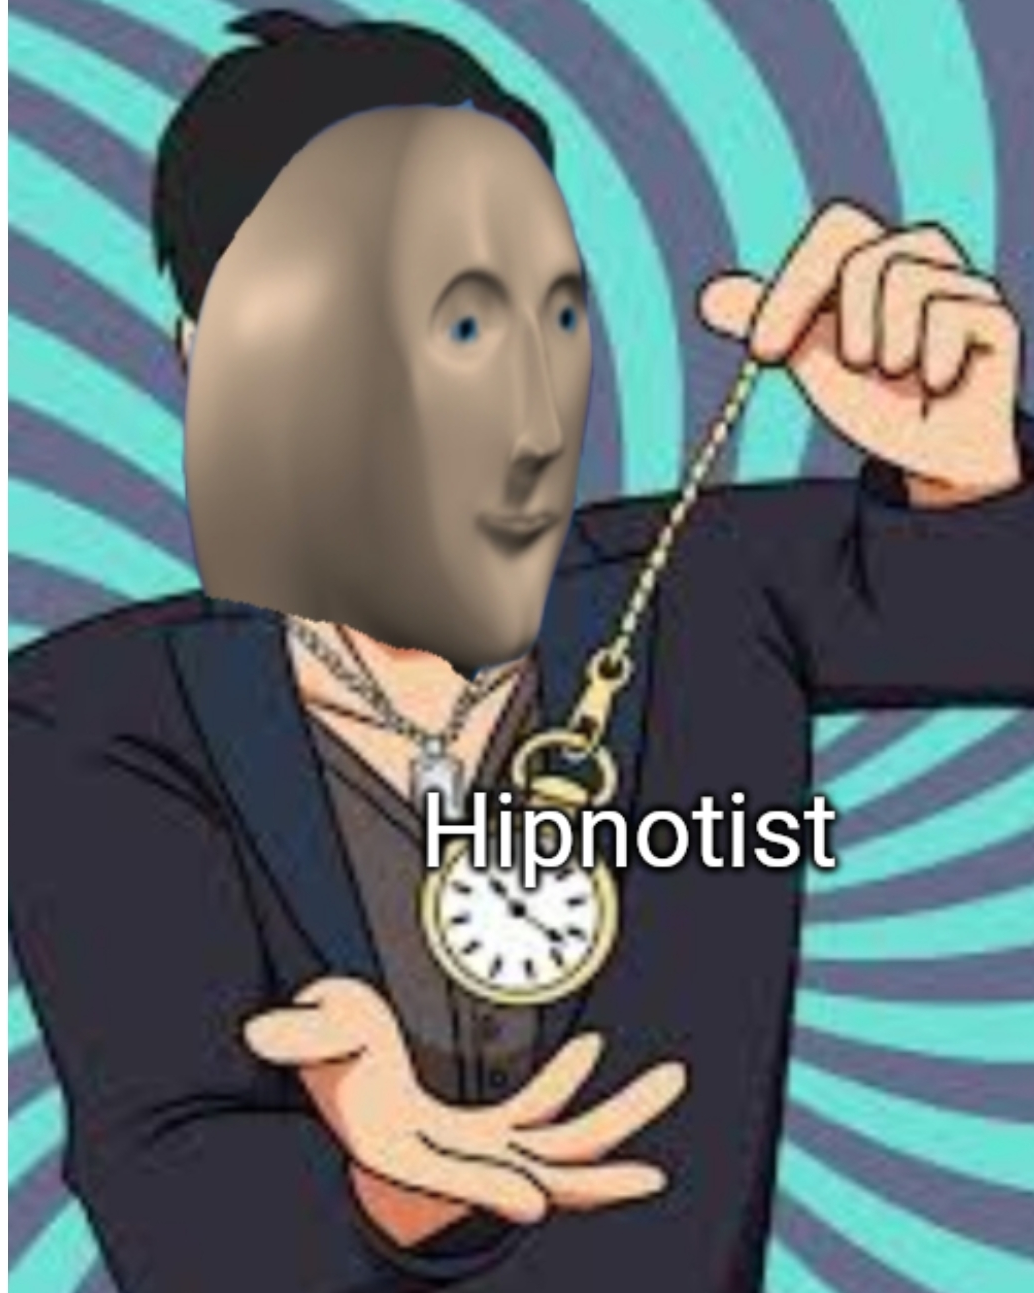 Hipnotist Blank Meme Template